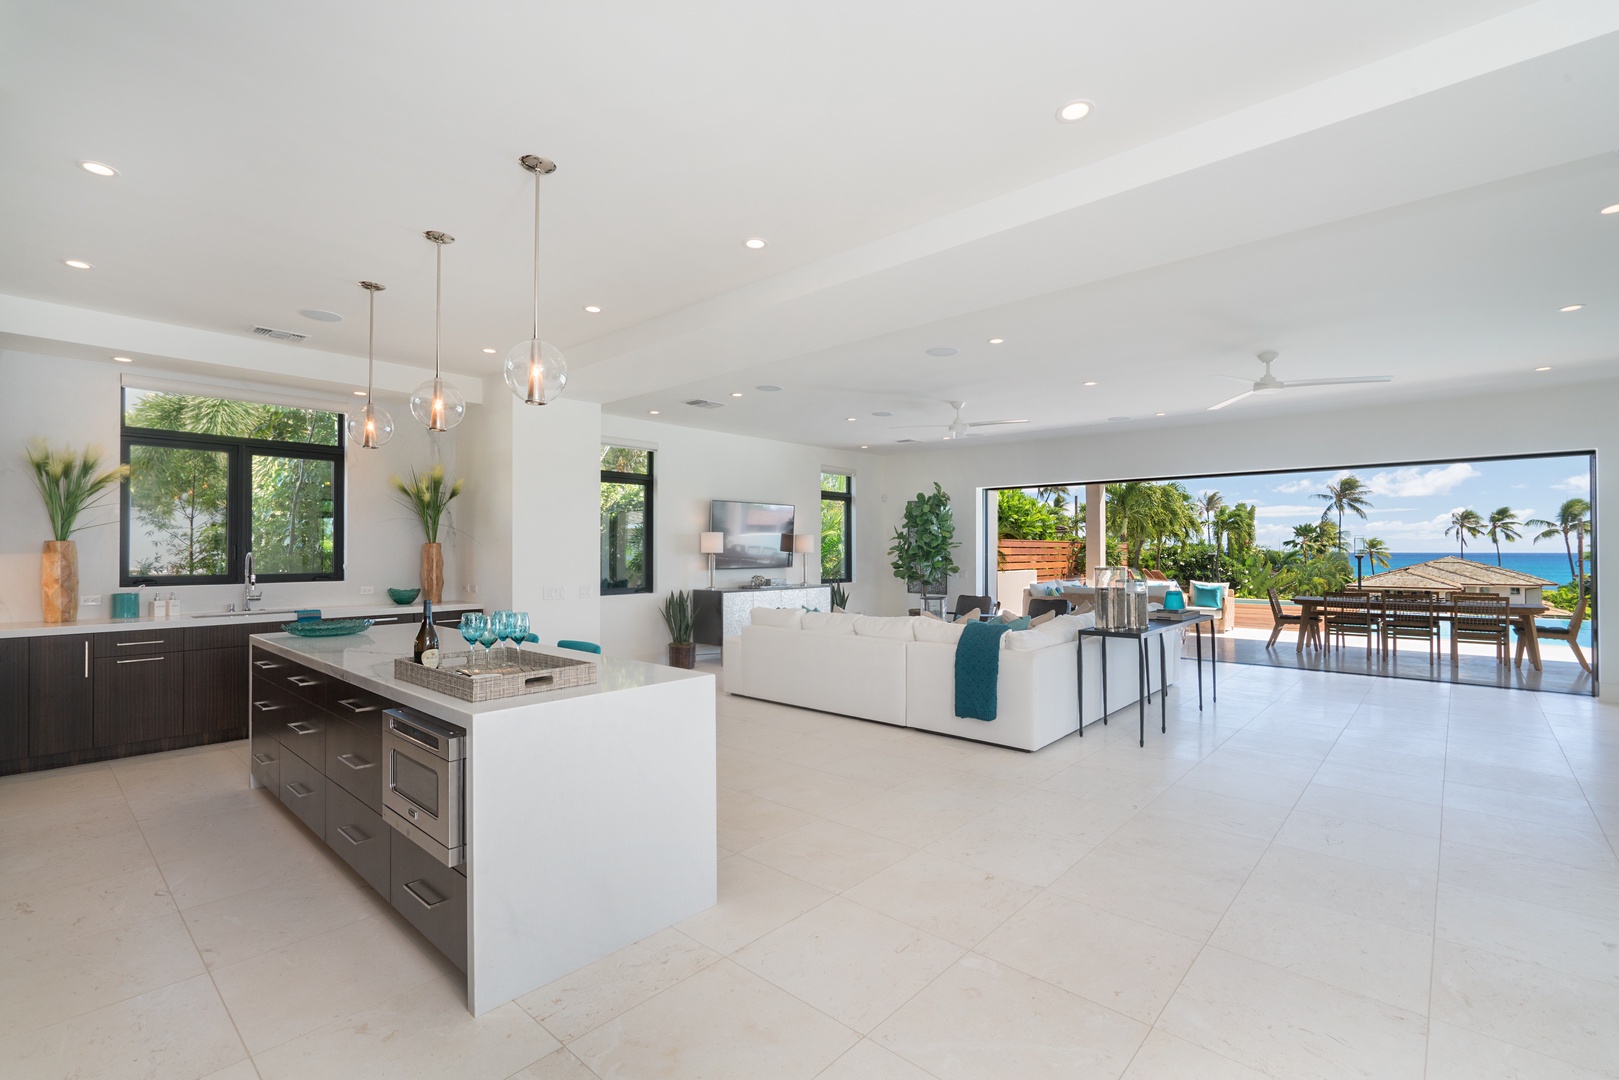 Honolulu Vacation Rentals, Diamond Head Grandeur - The kitchen overlooks the living area